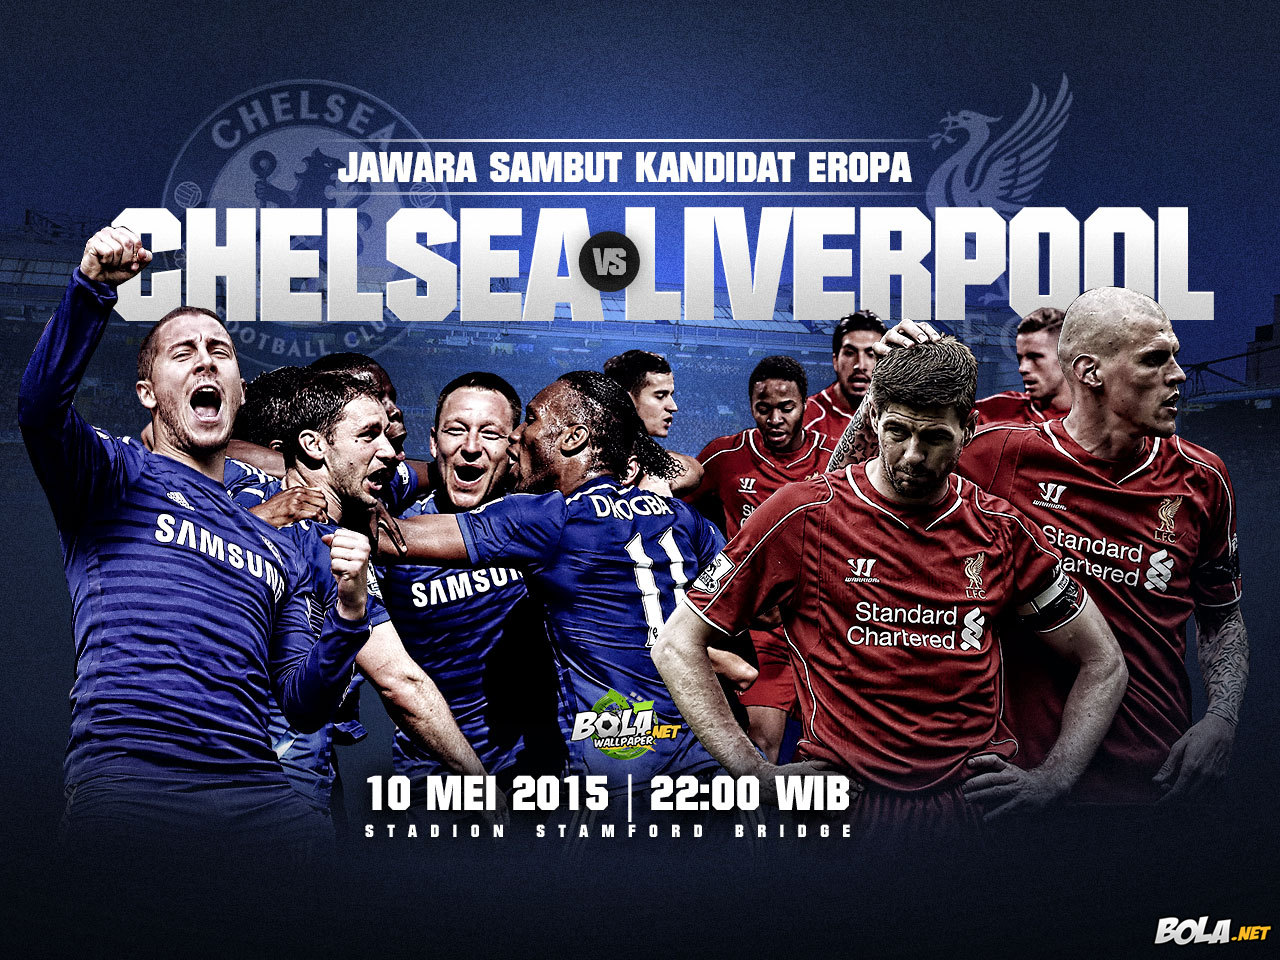 Download Wallpaper Chelsea Vs Liverpool Bolanet